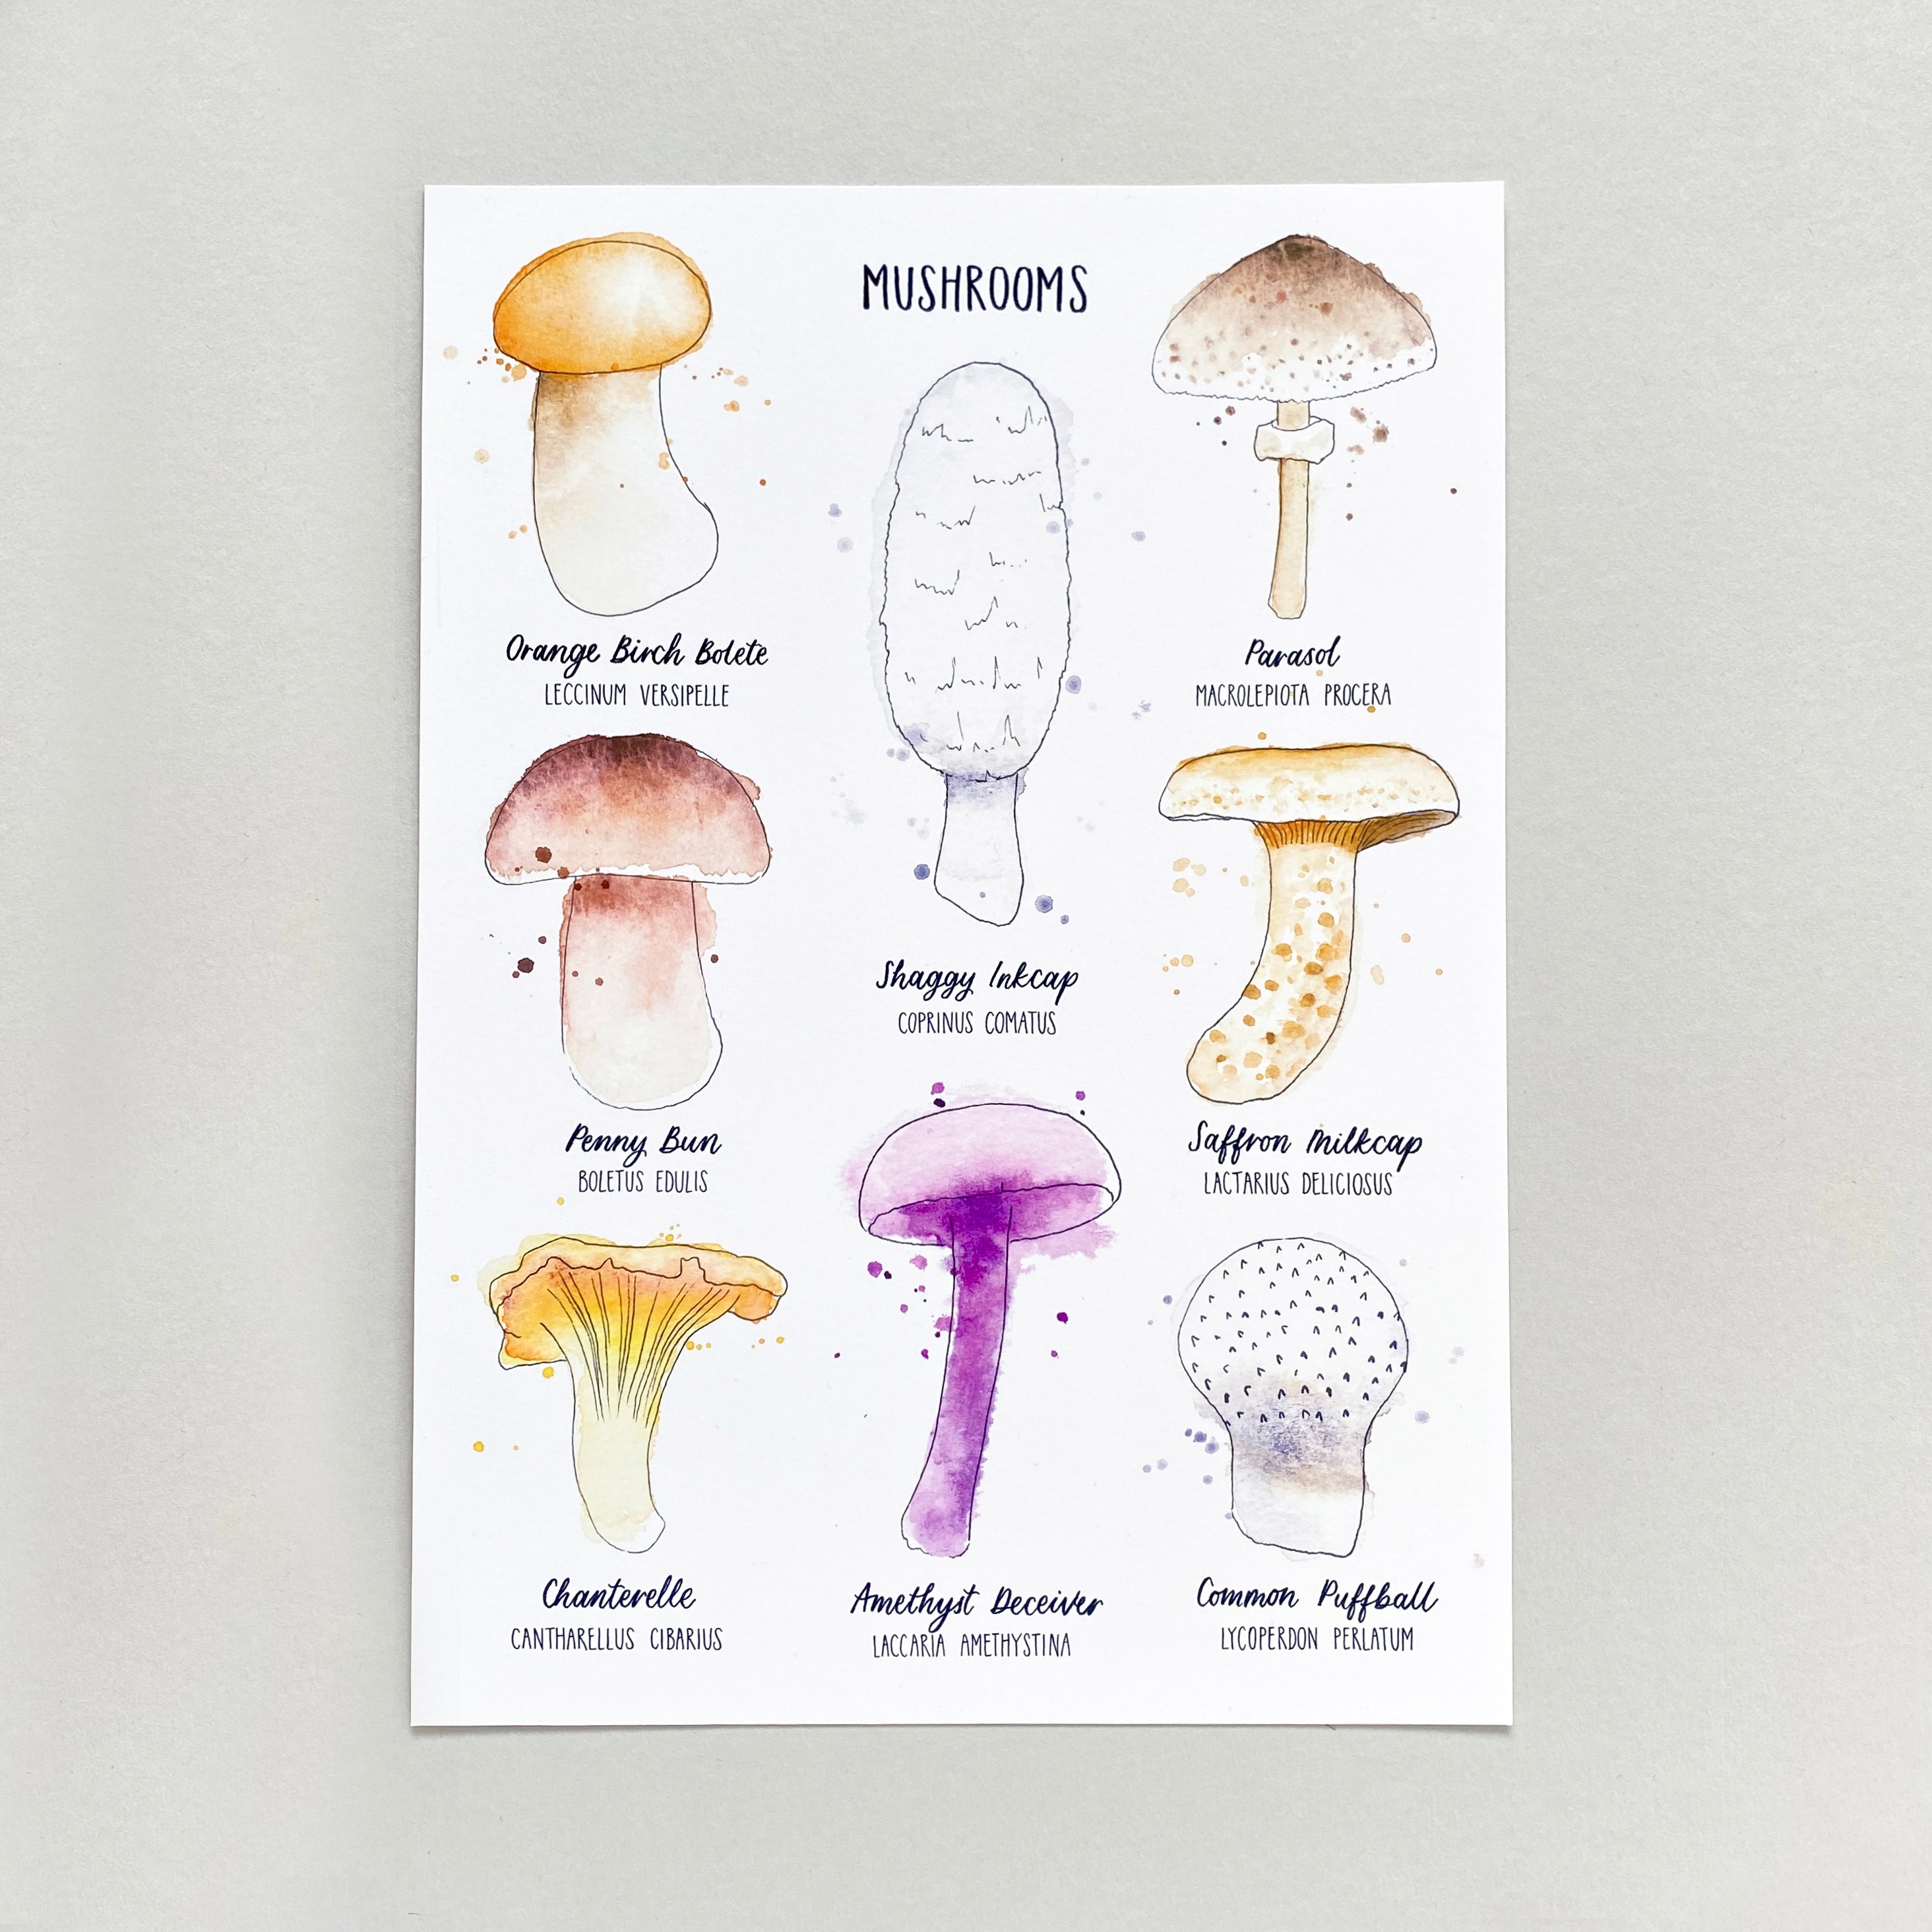 Mushrooms by Jules Birkby